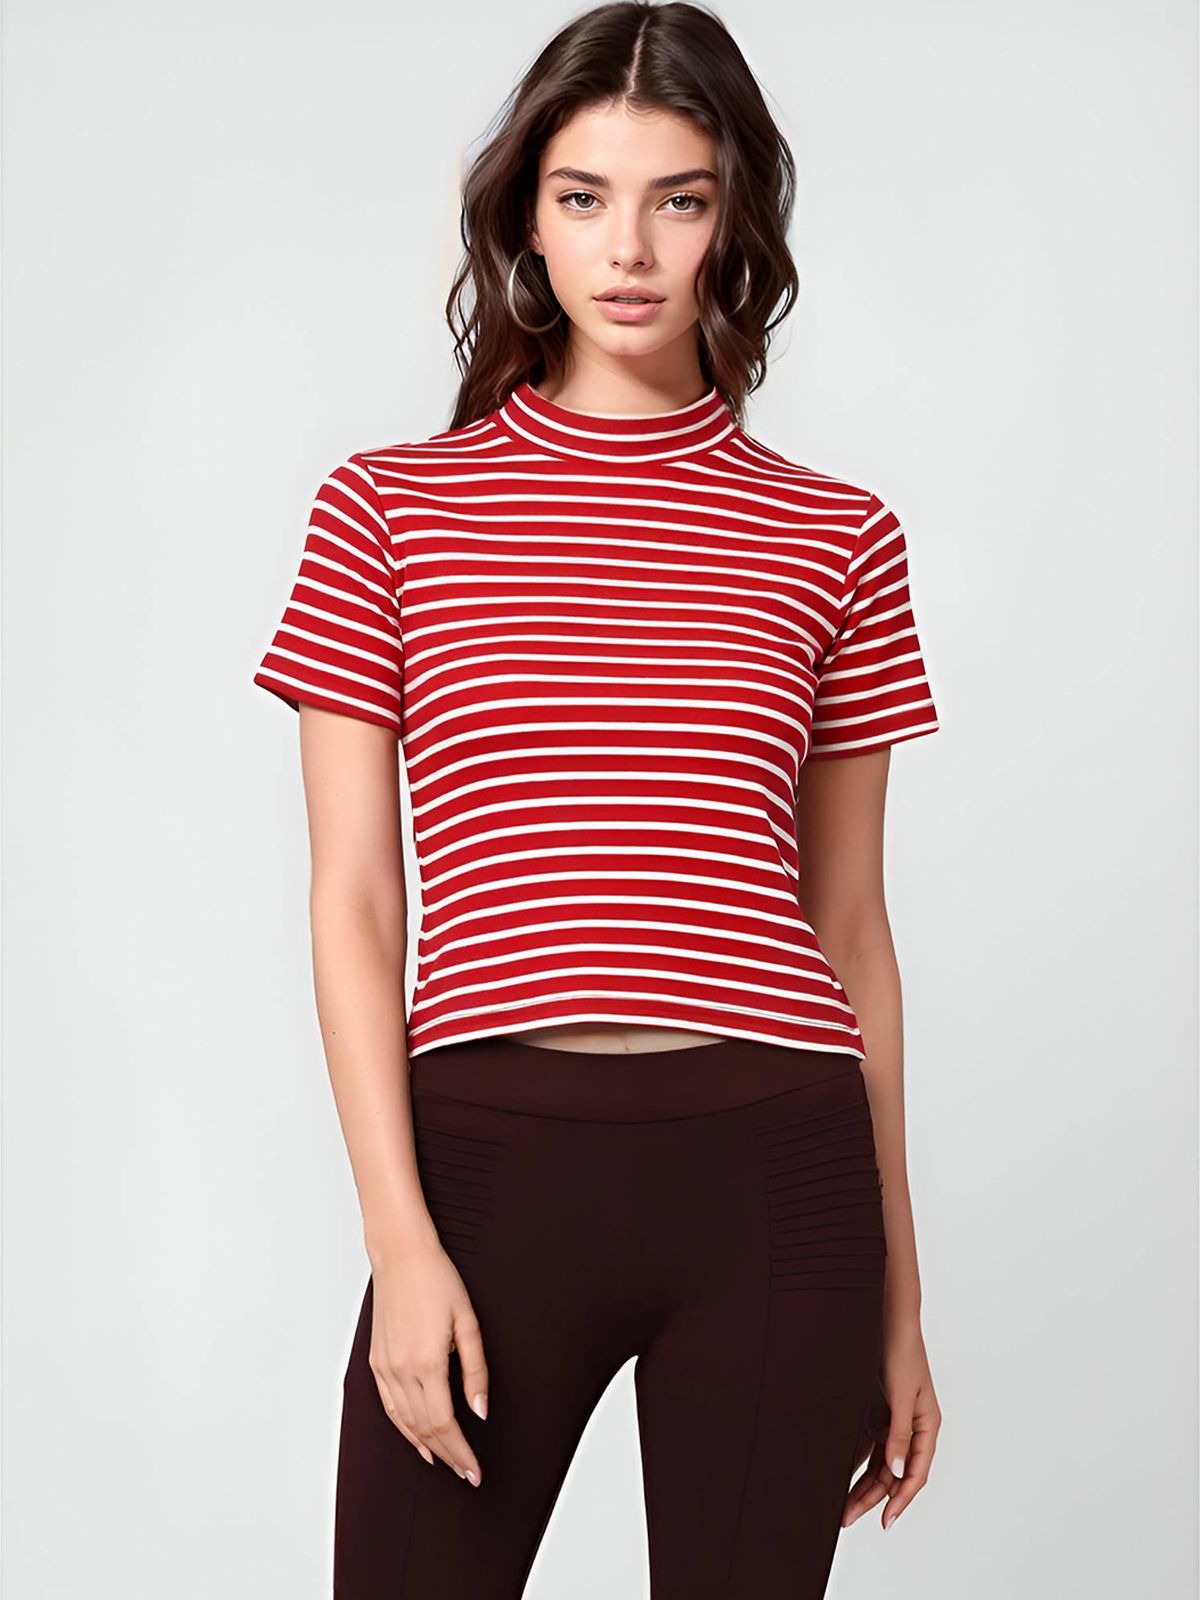     			UrbanMark Women High Neck Striped Half Sleeves T-Shirt - Red